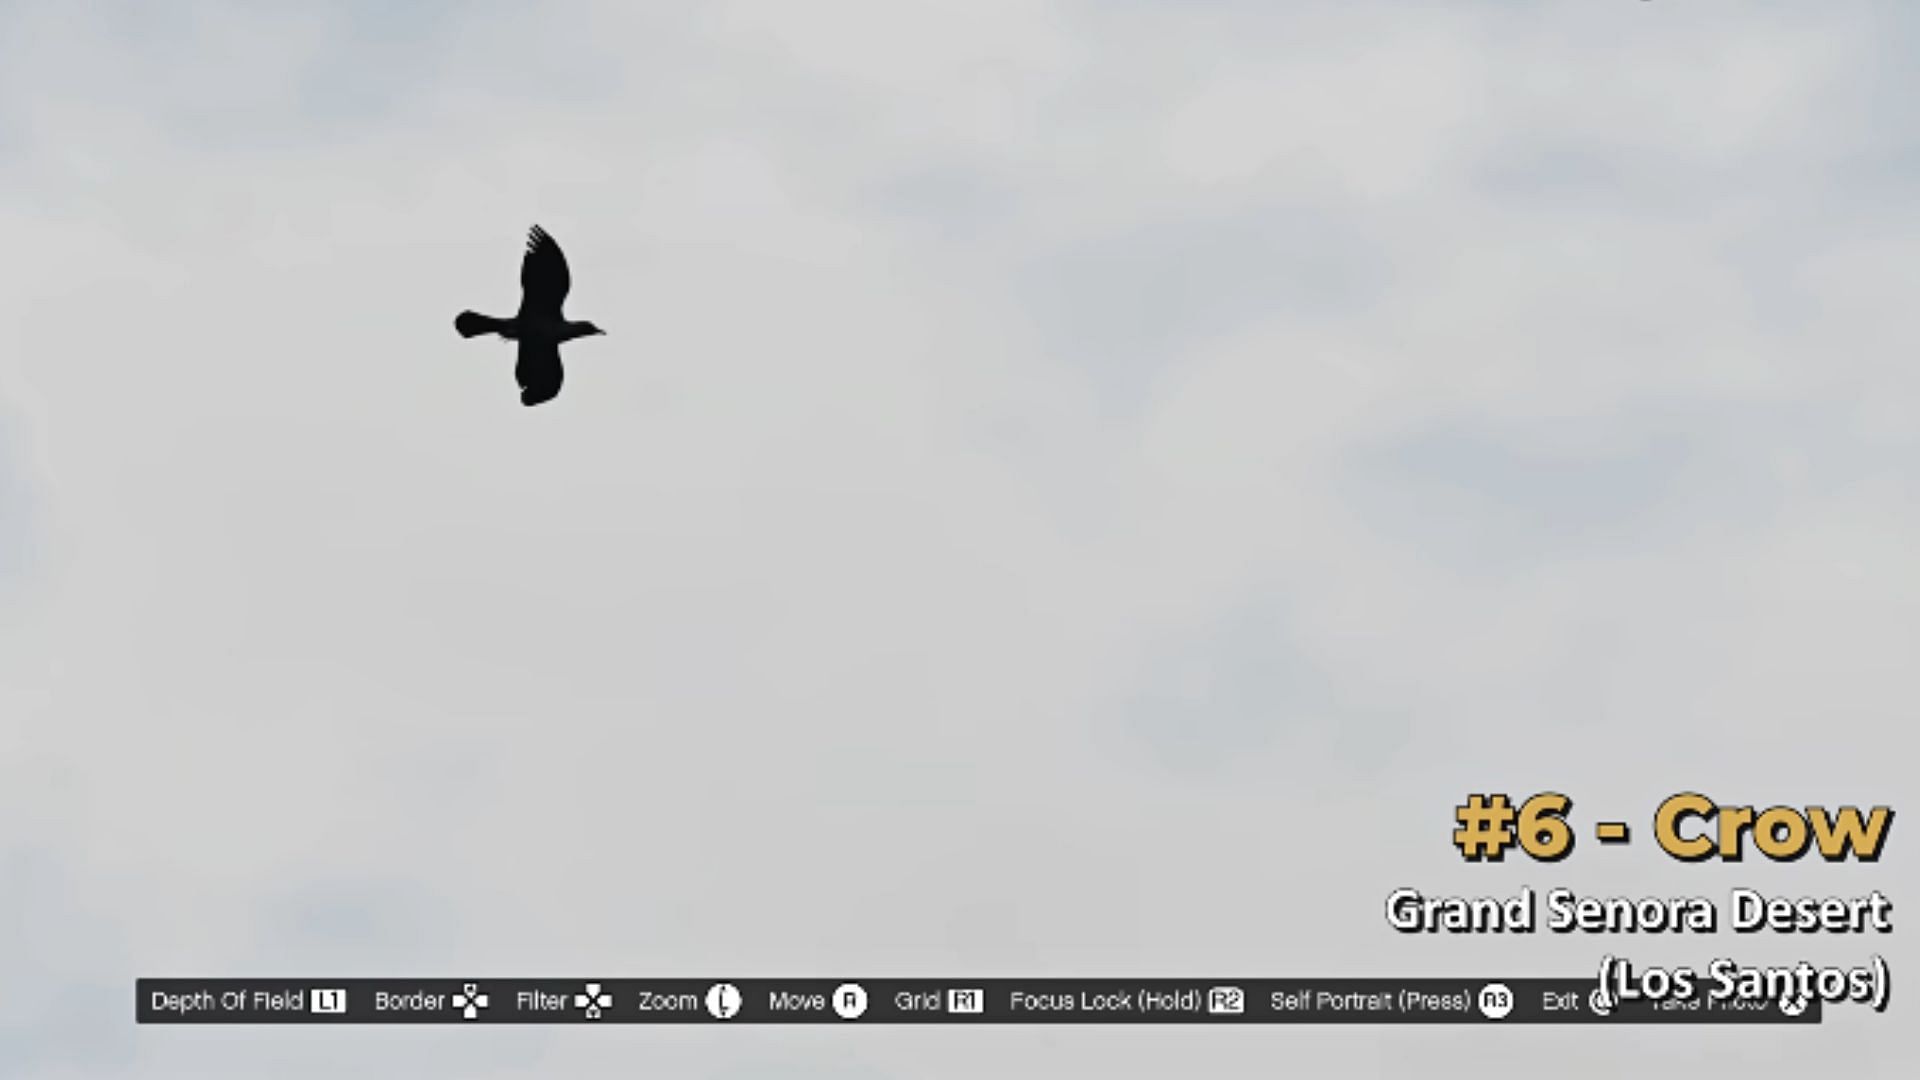 A crow flying in Grand Senora Desert region of Blaine County (Image via YouTube/GTA Series Videos)